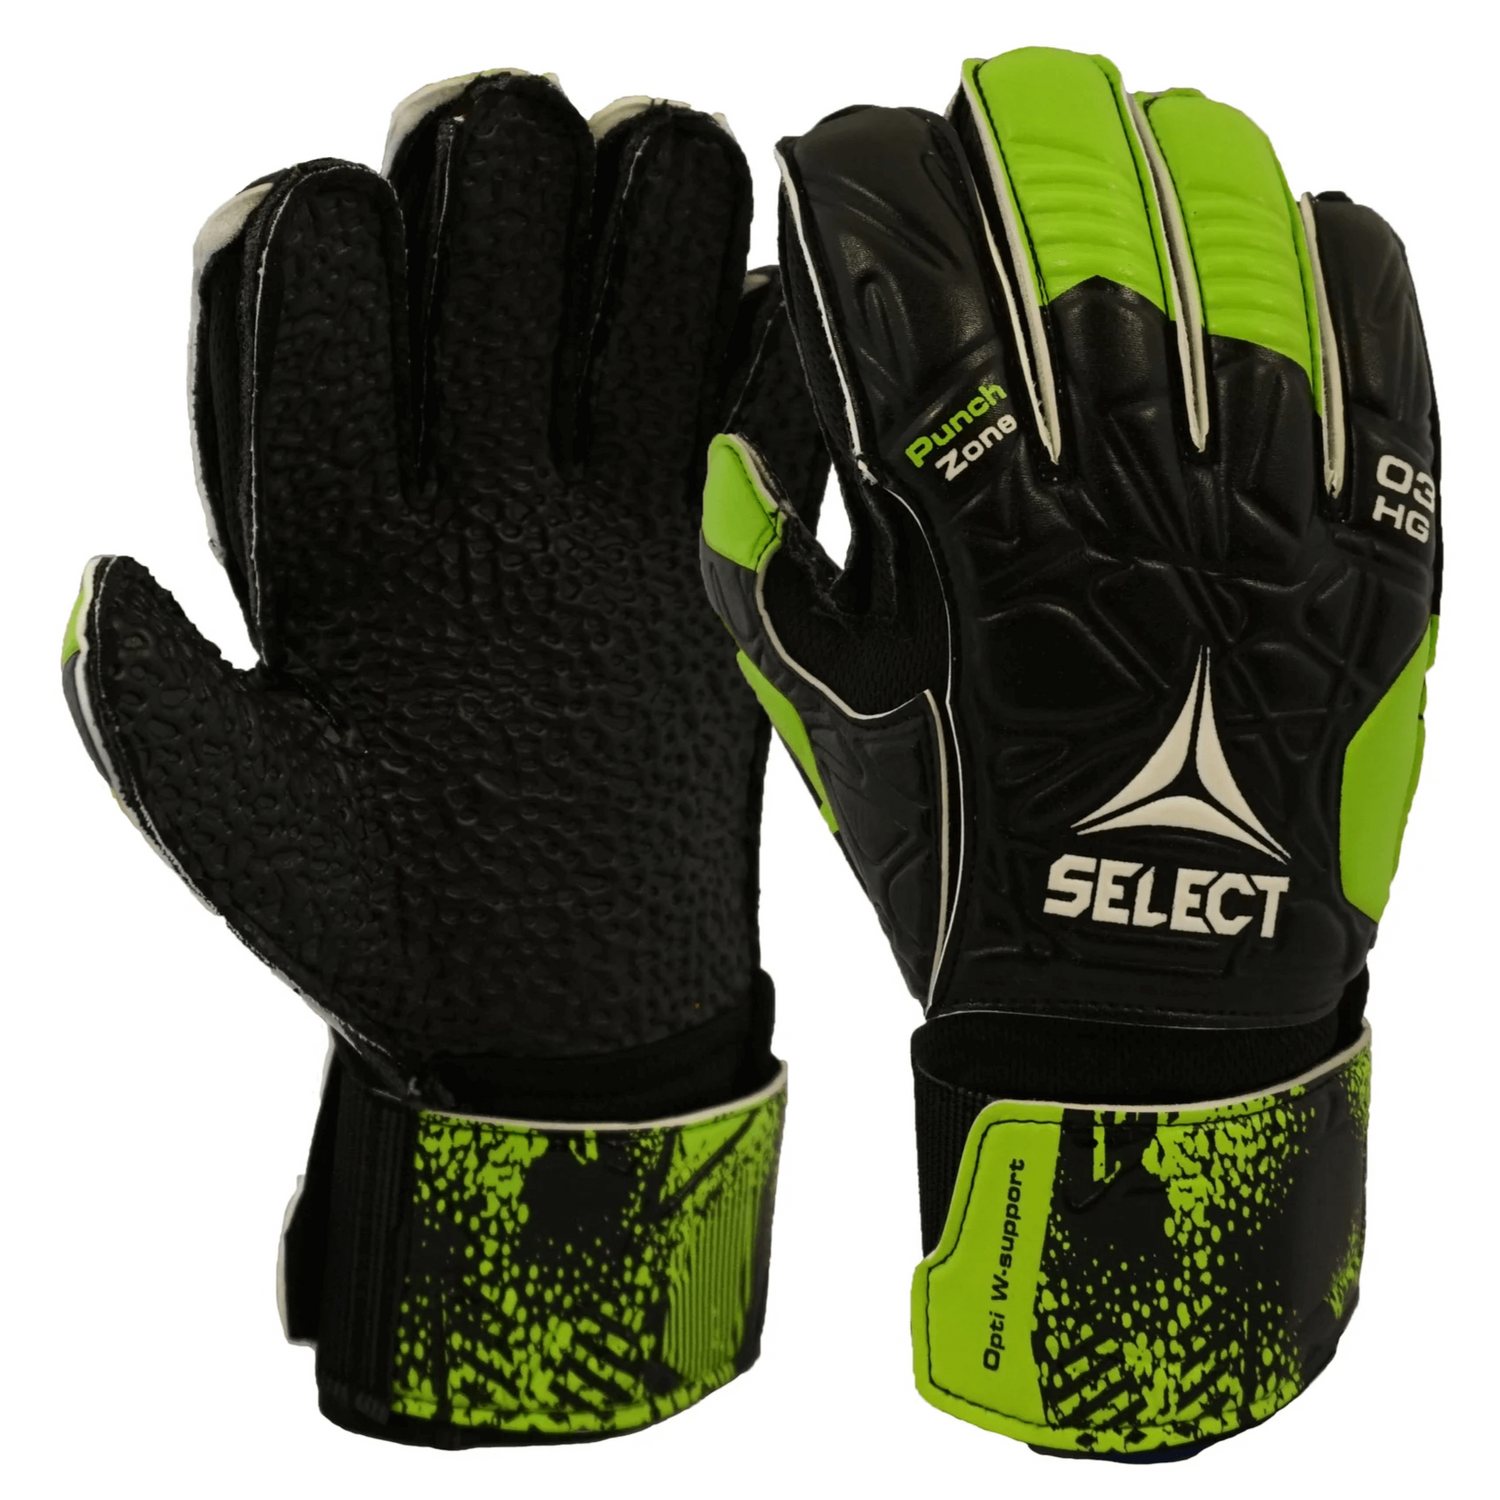 Select 03 Youth Protec HG Goalkeeper Gloves - Black-Green (Pair)